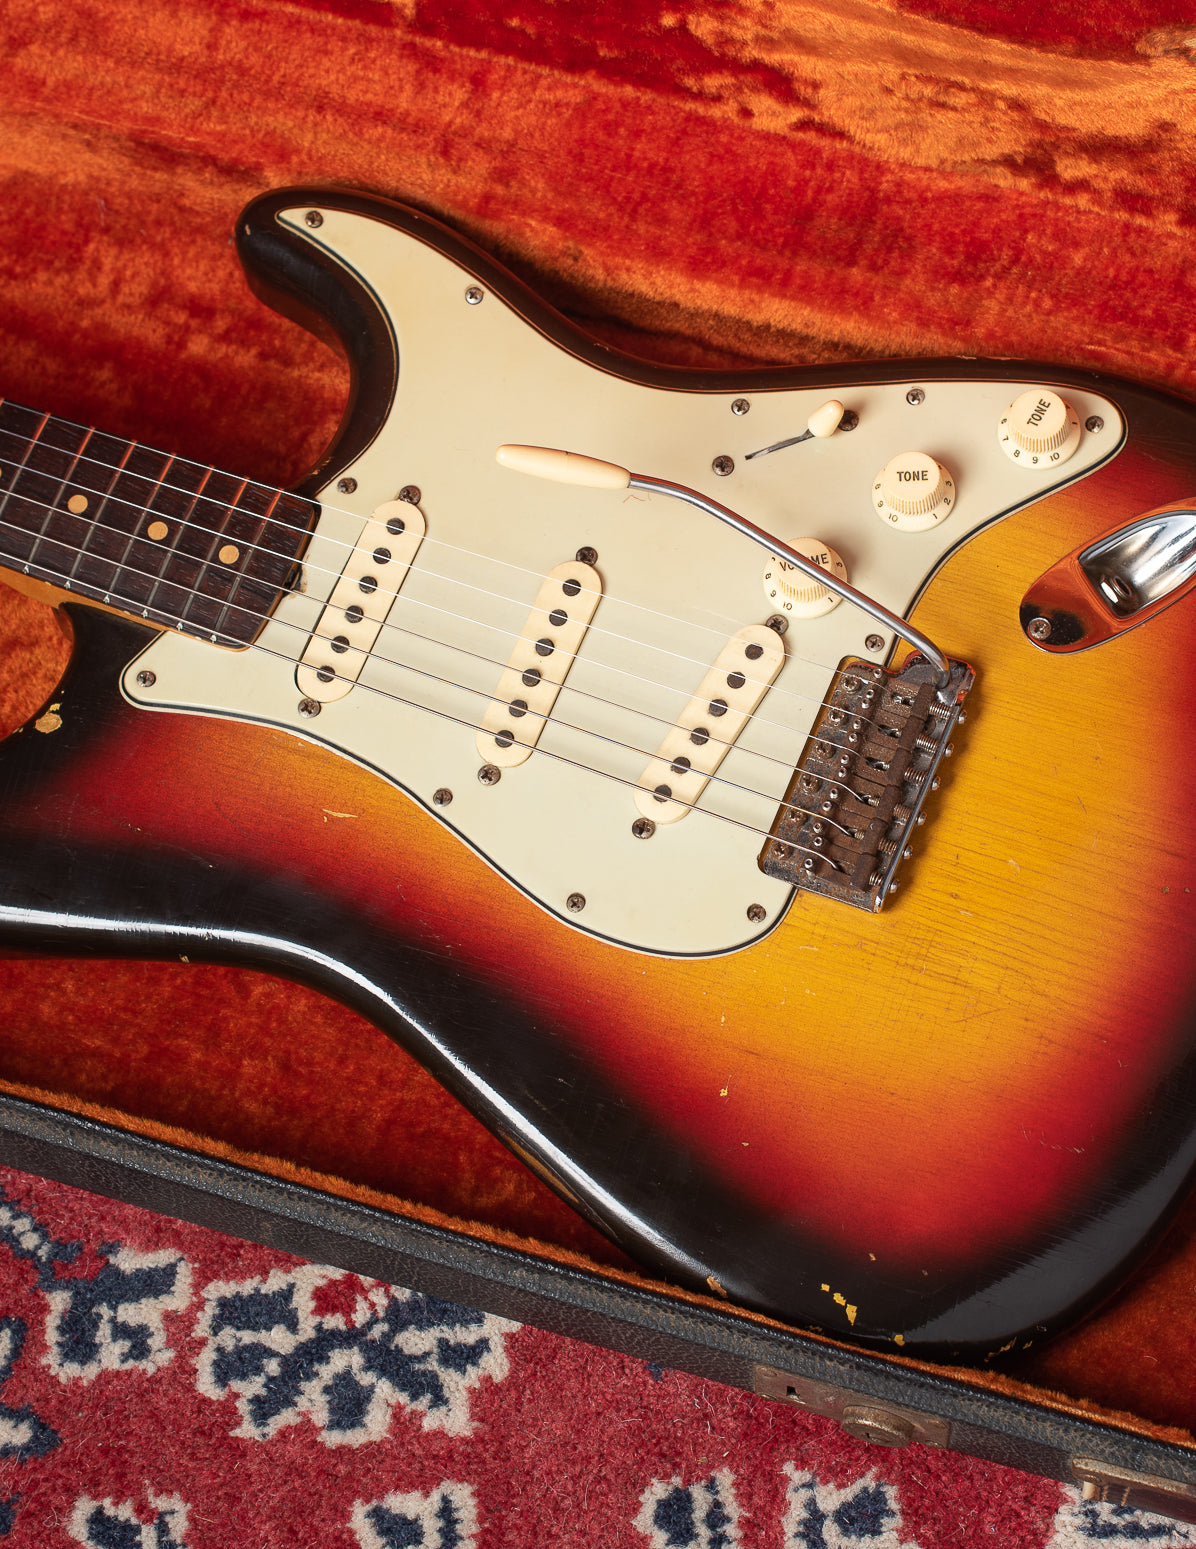 1963 Fender Stratocaster body in case